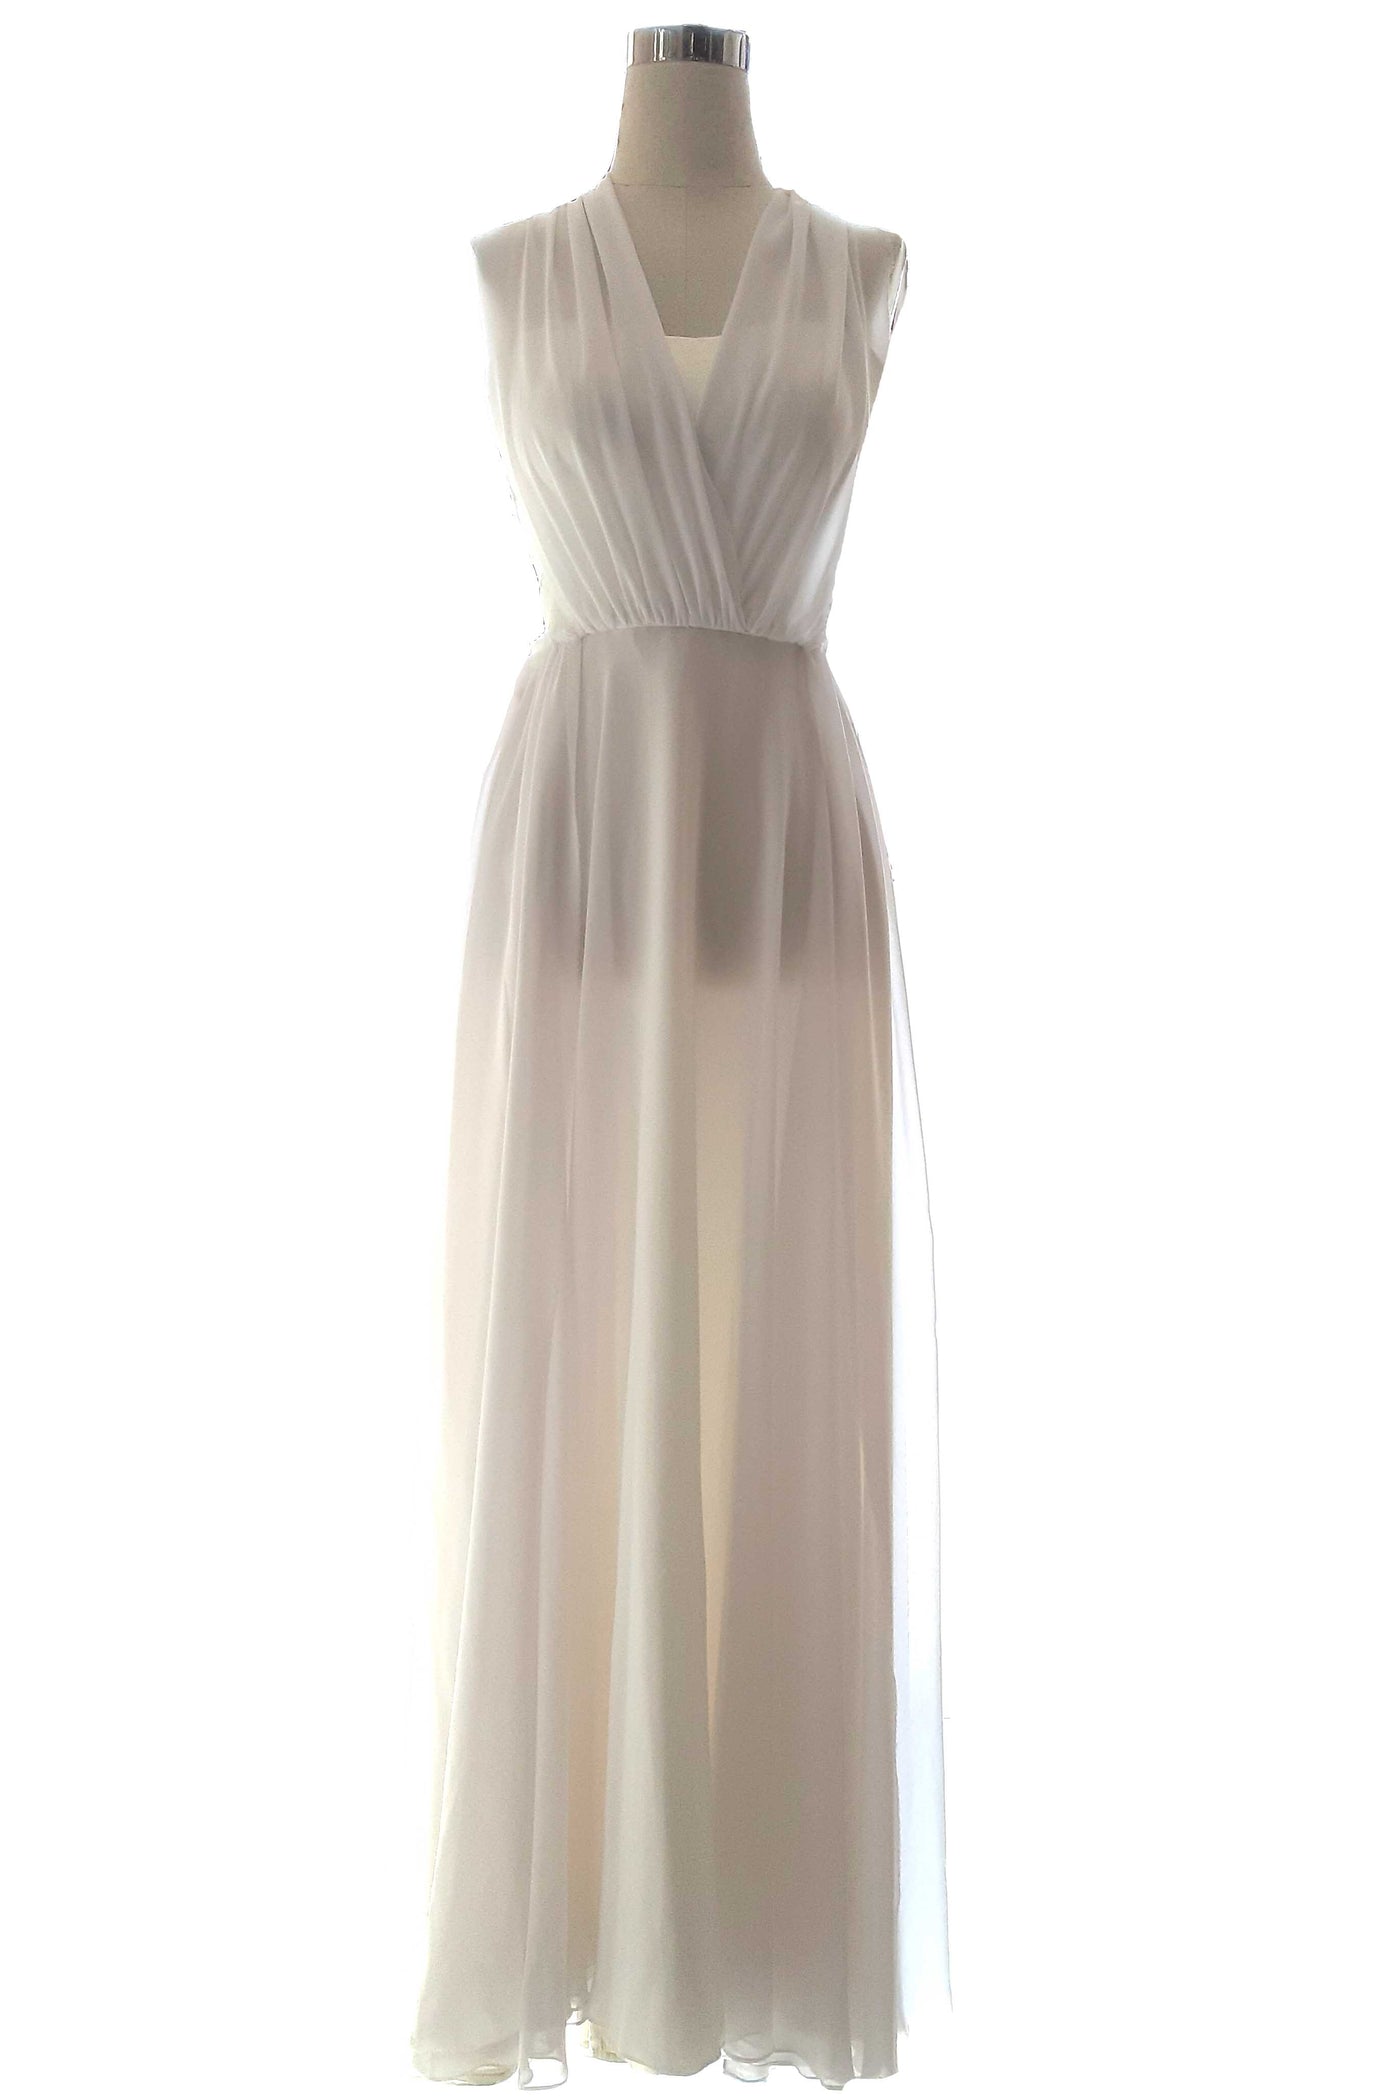 Rent : Private Label - White Convertible Bridesmaids Dress